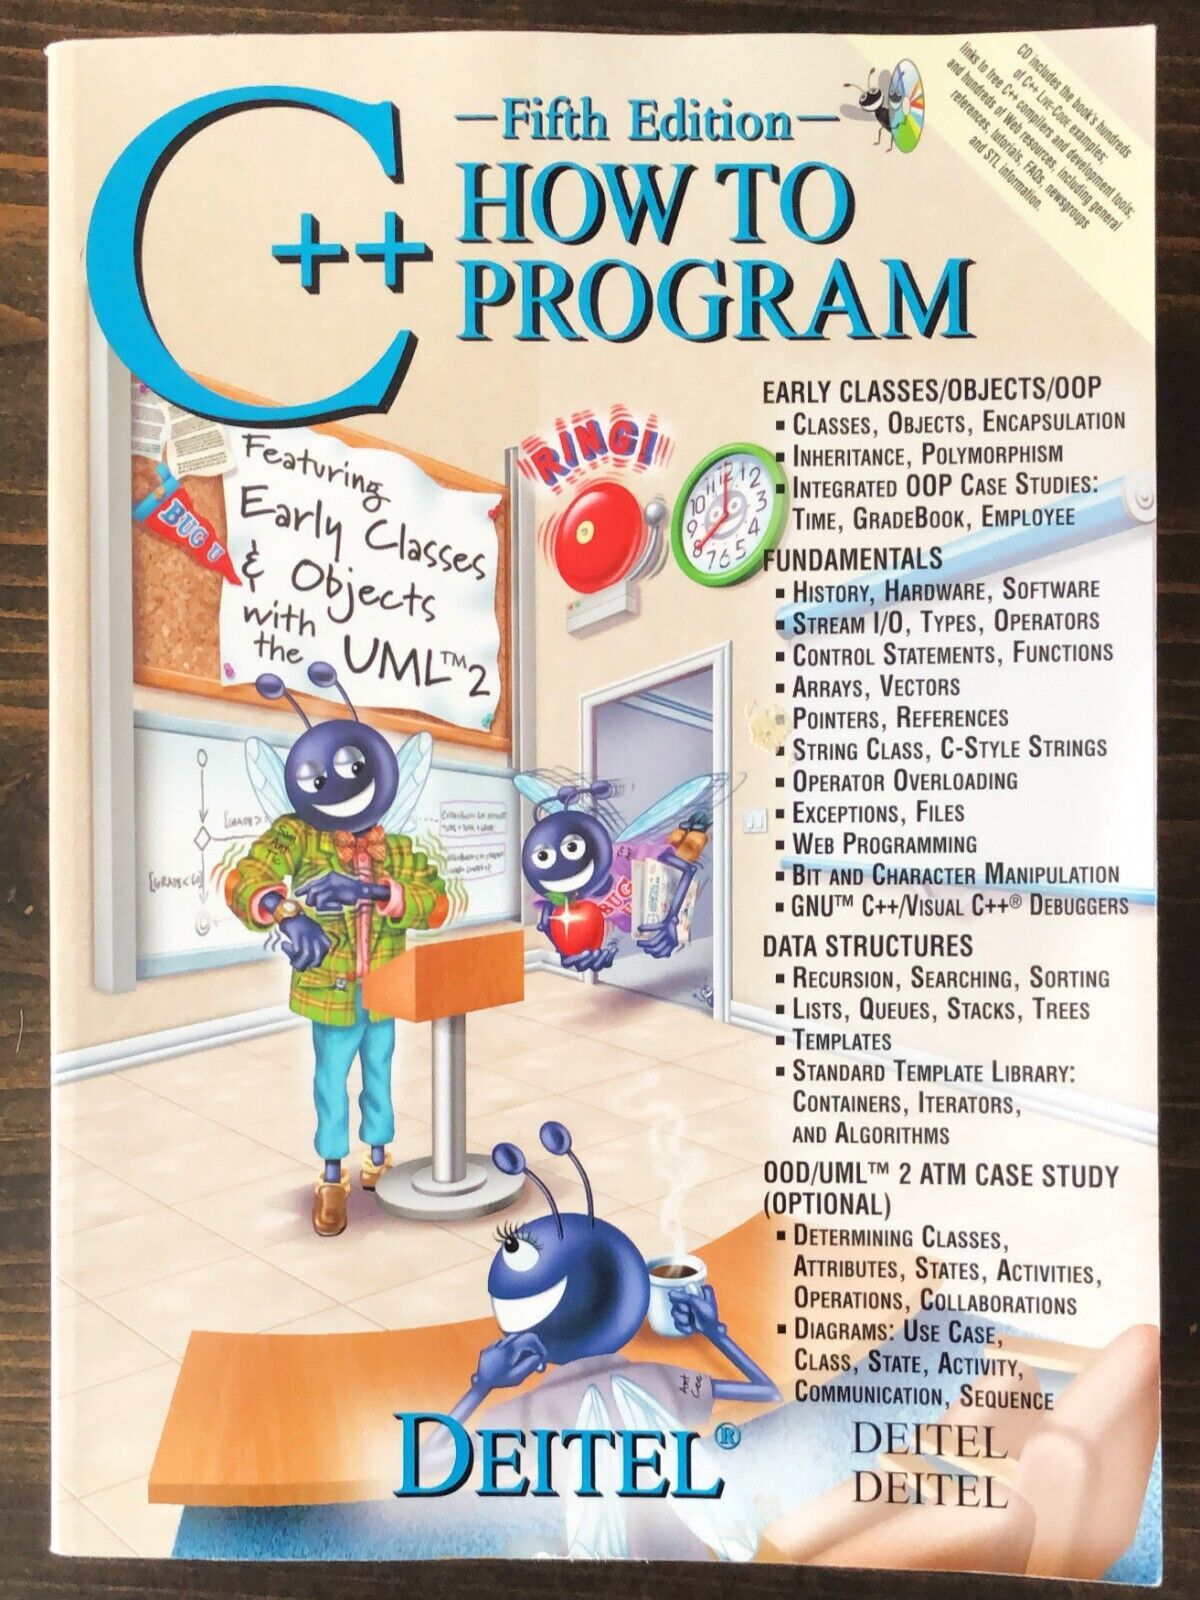 C++ How To Program by H. M. Deitel and P. J. Deitel (Fifth Edition)